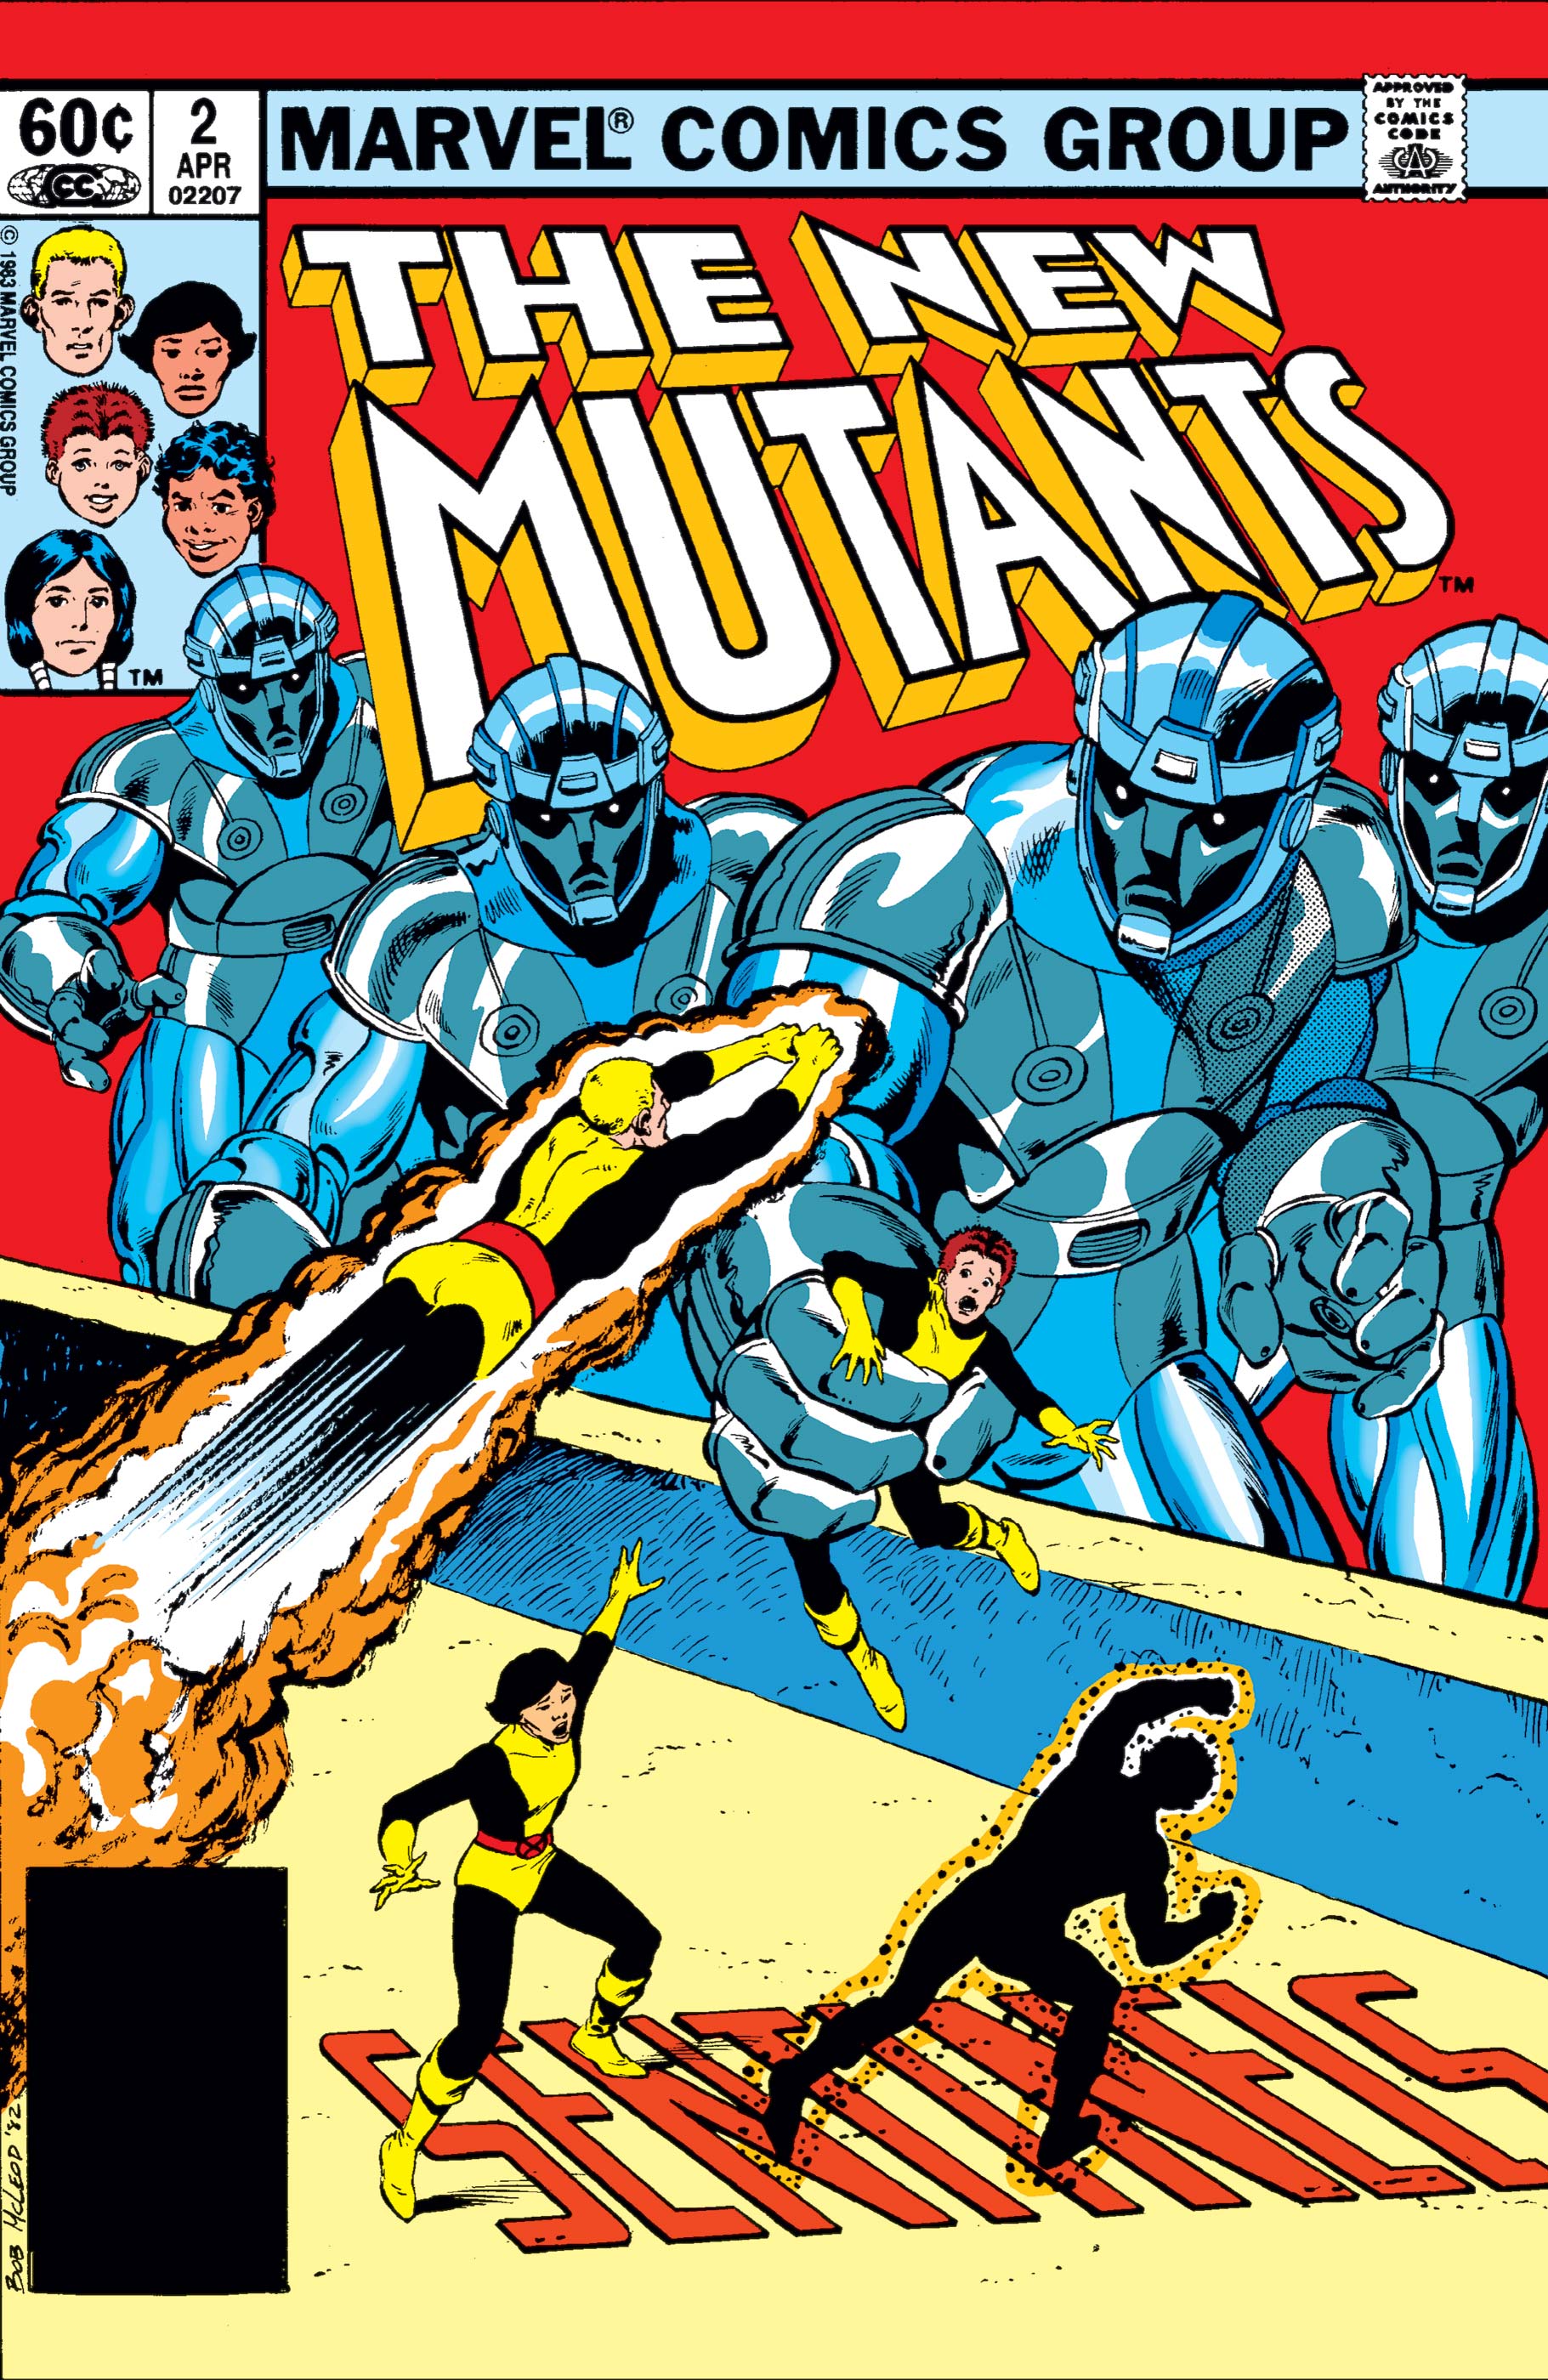 Marvel New Mutants #2 